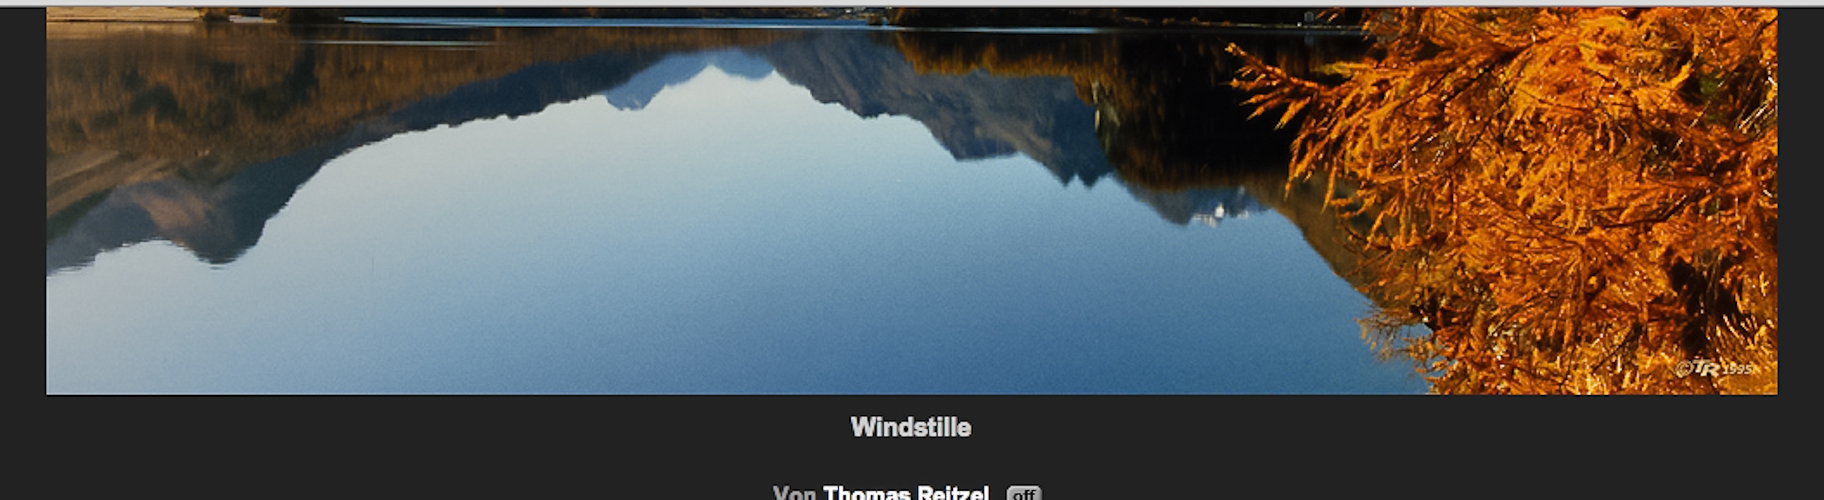 screenshot: TR's "Windstille"